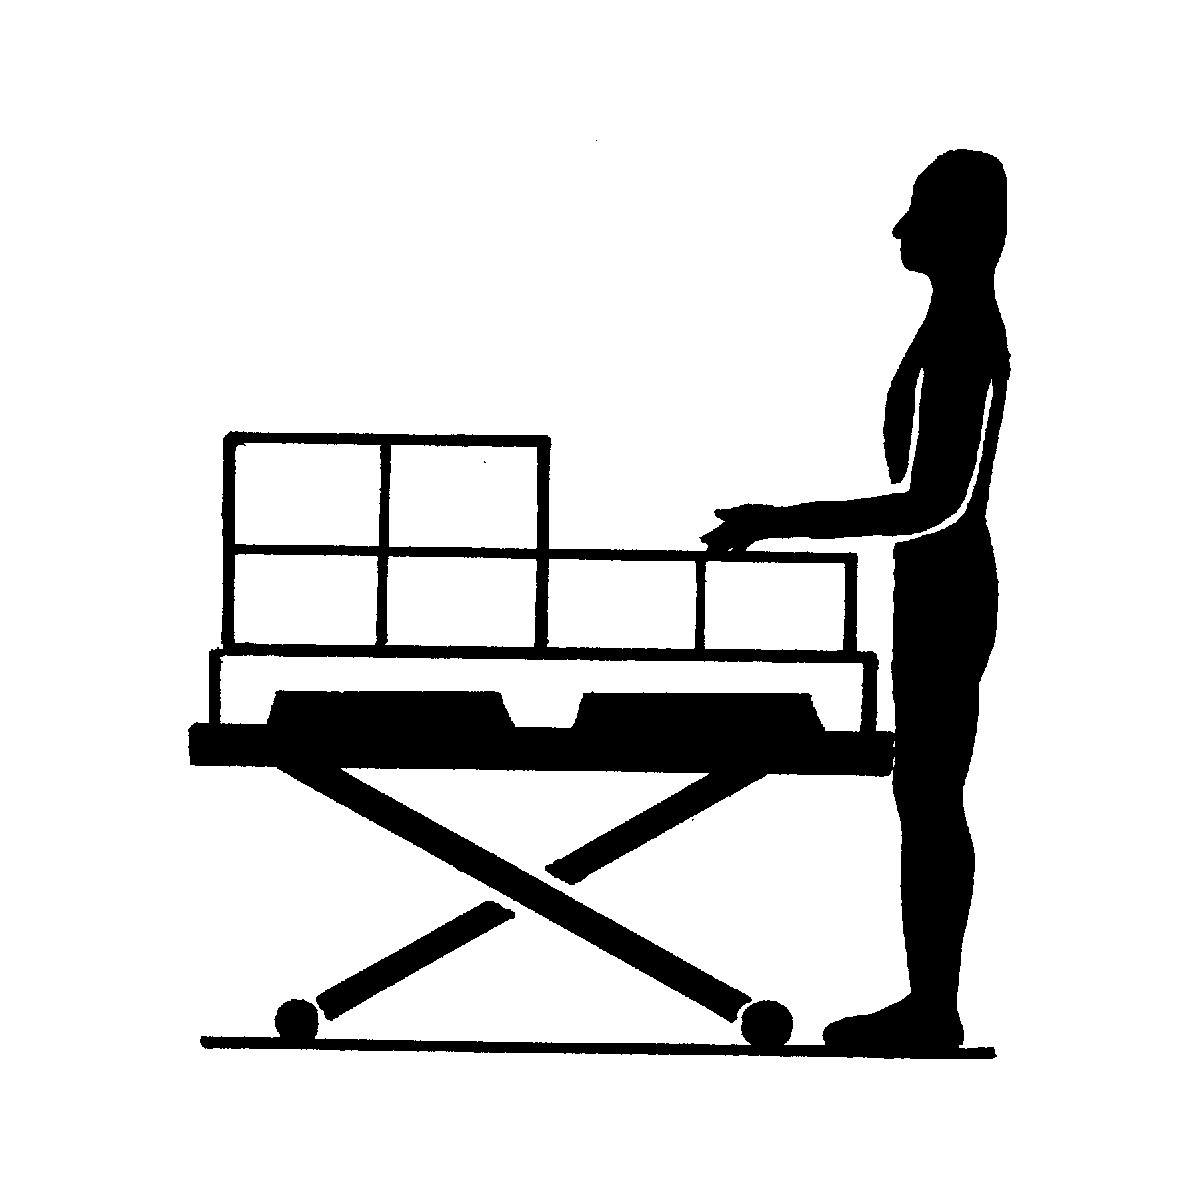 Low profile lift table, E series – Flexlift (Product illustration 9)-8